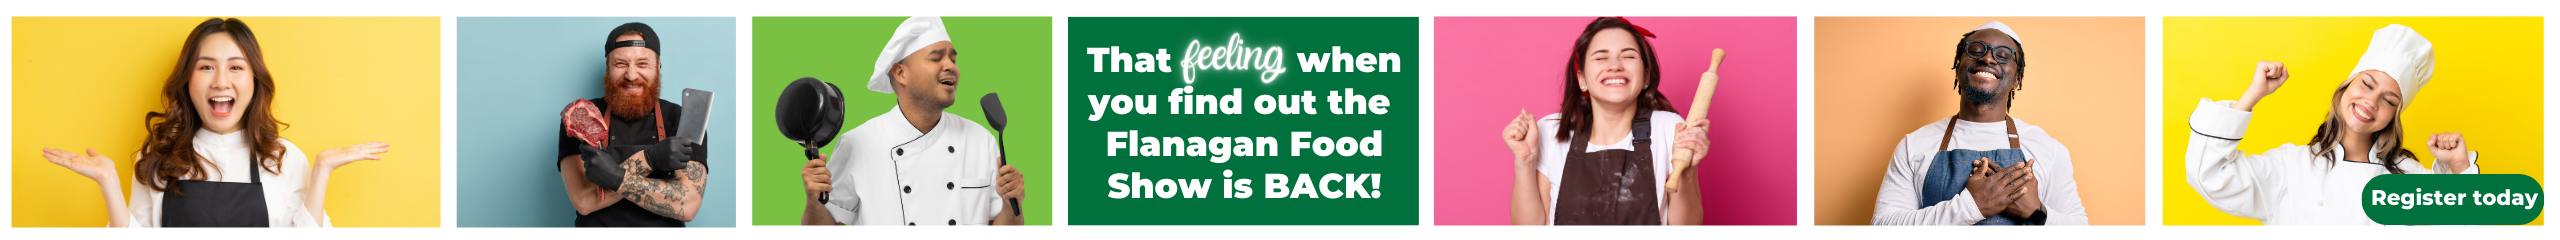 The Flanagan Foodshow is back register at www.flanagan.ca